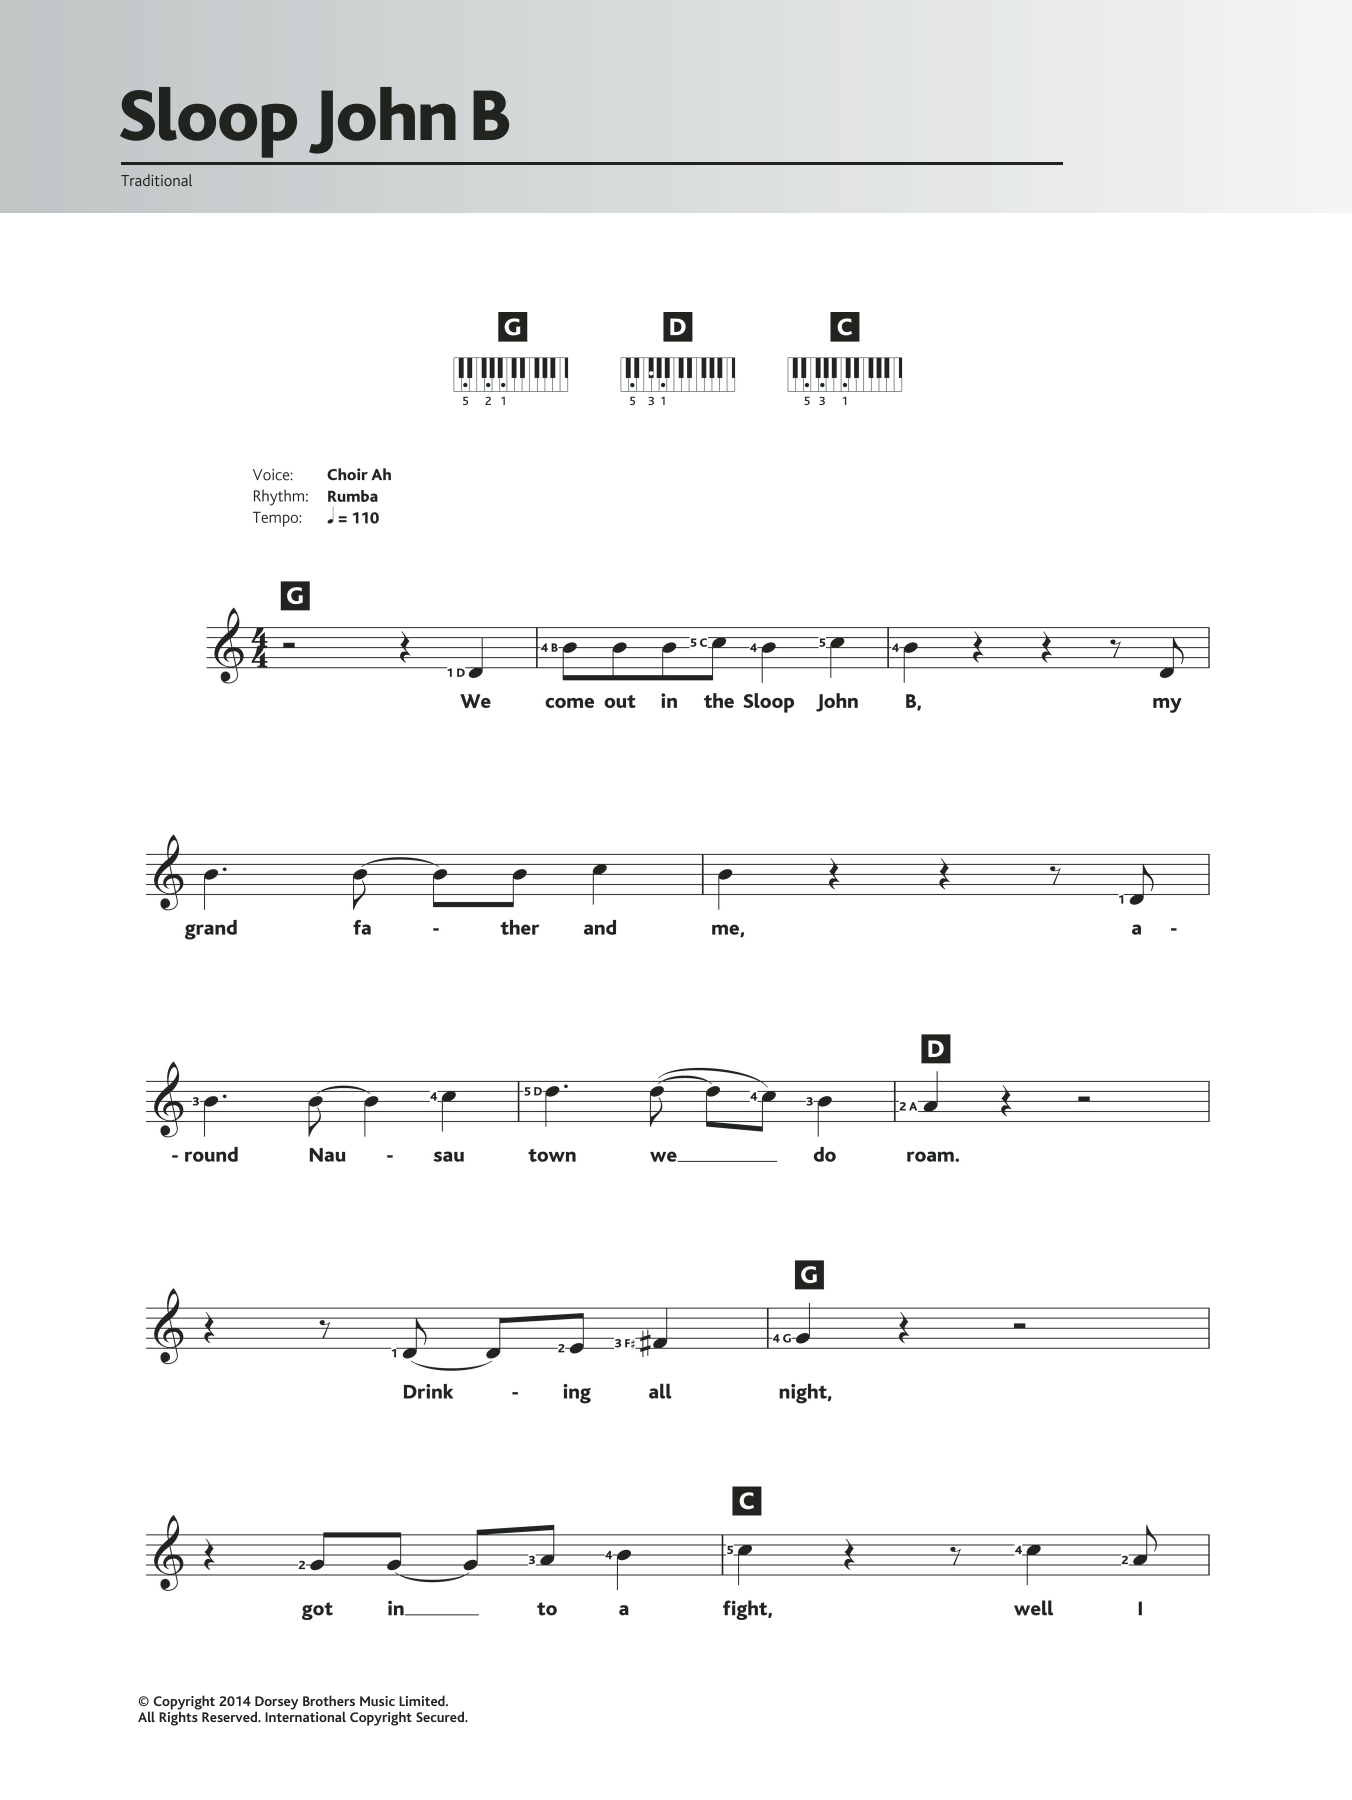 Traditional Sloop John B. Sheet Music Notes & Chords for Guitar Tab - Download or Print PDF